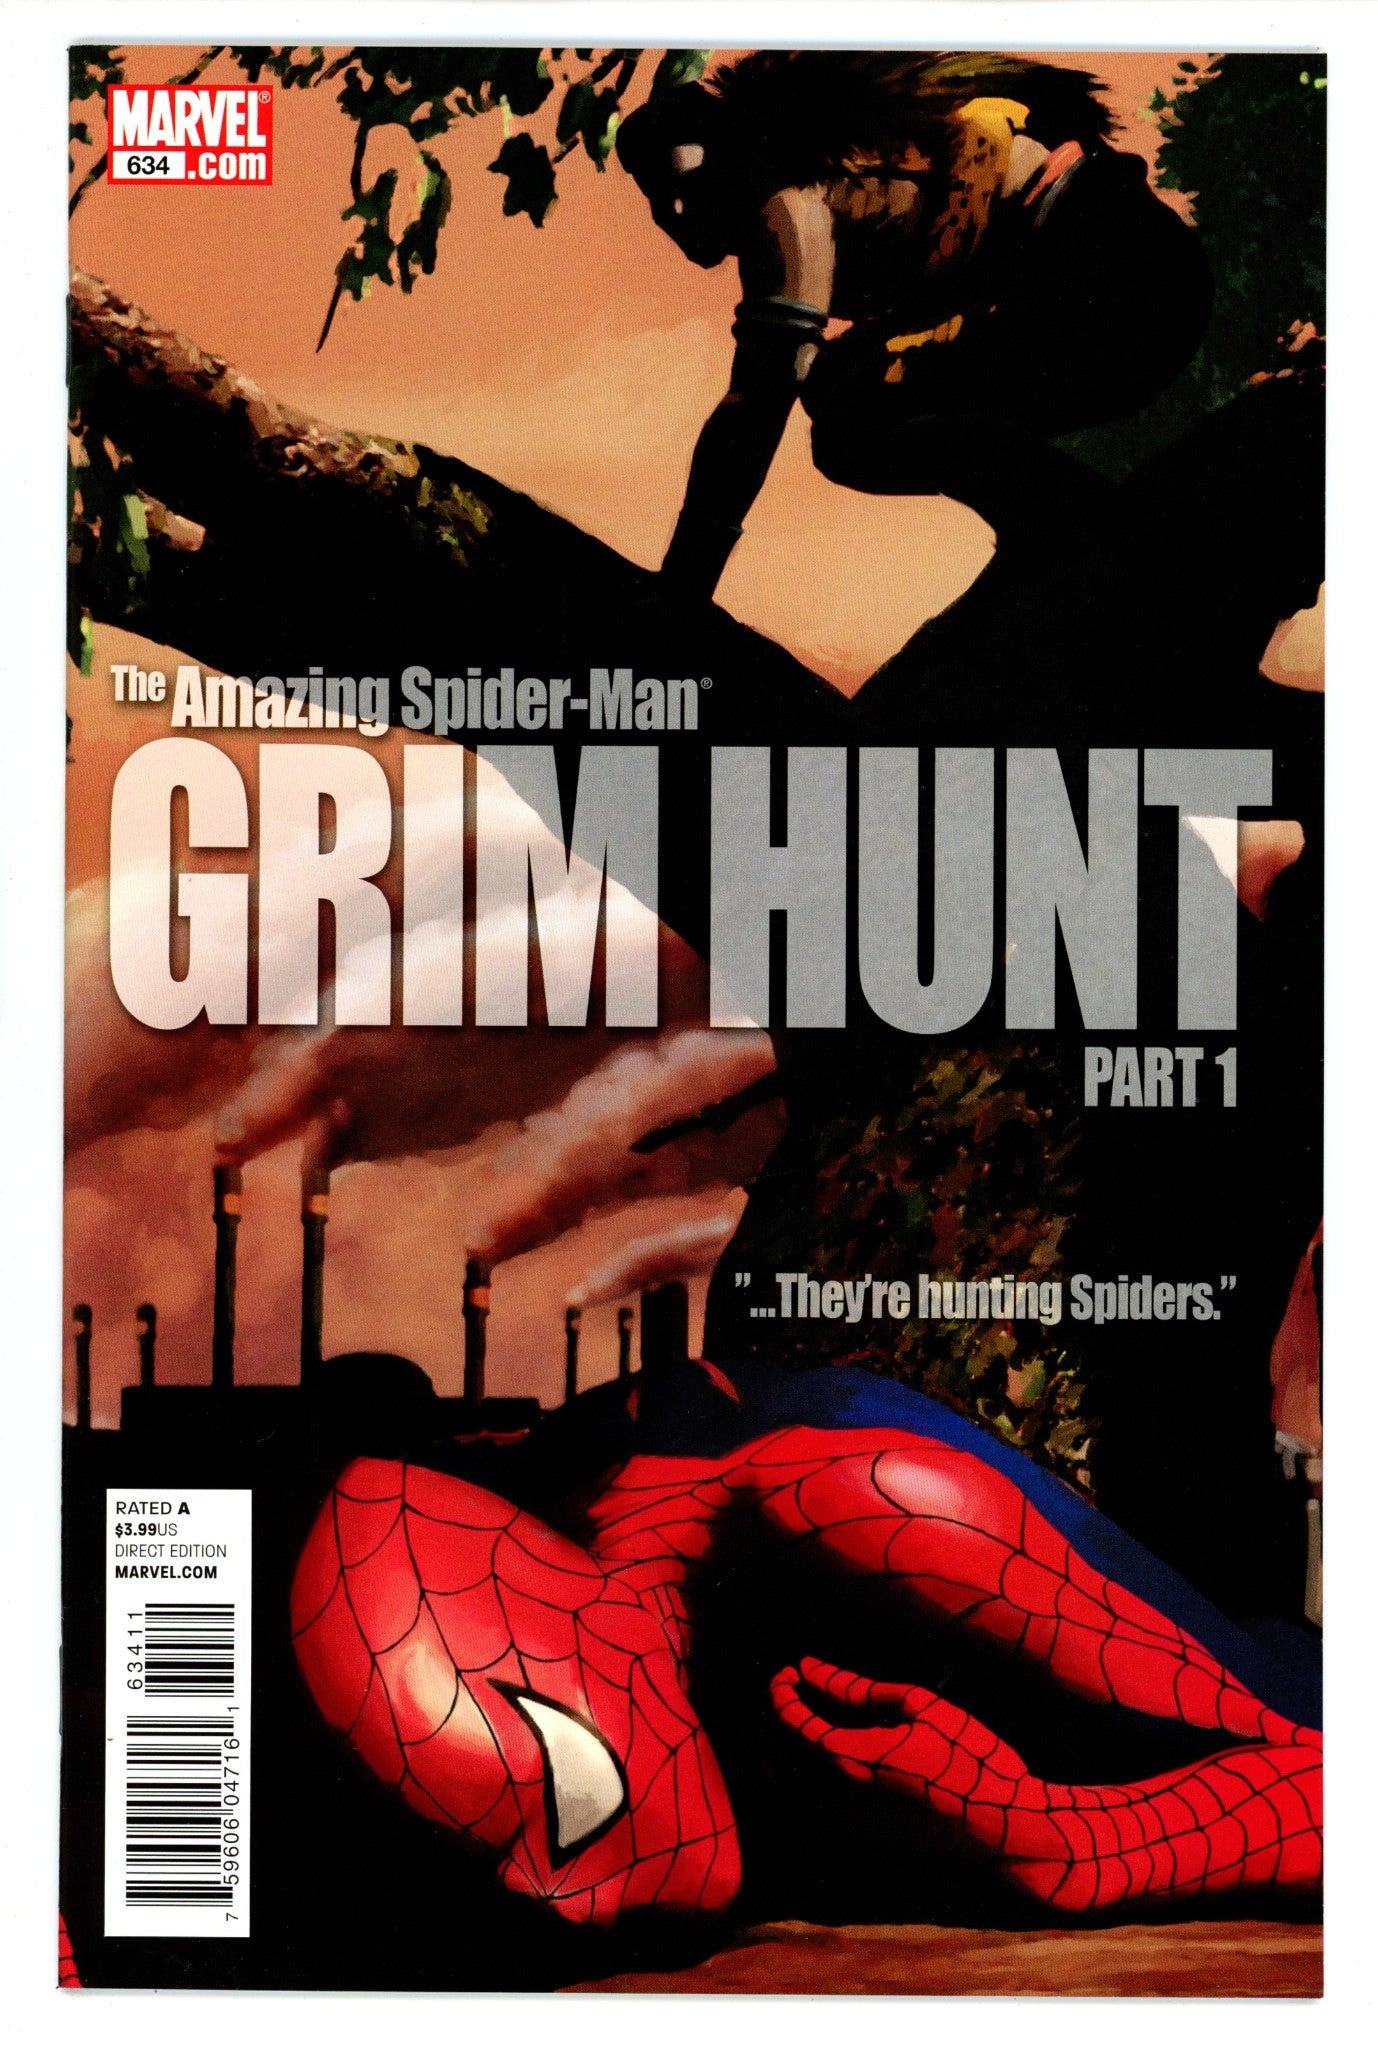 The Amazing Spider-Man Vol 2 634 VF/NM (9.0) (2010) 